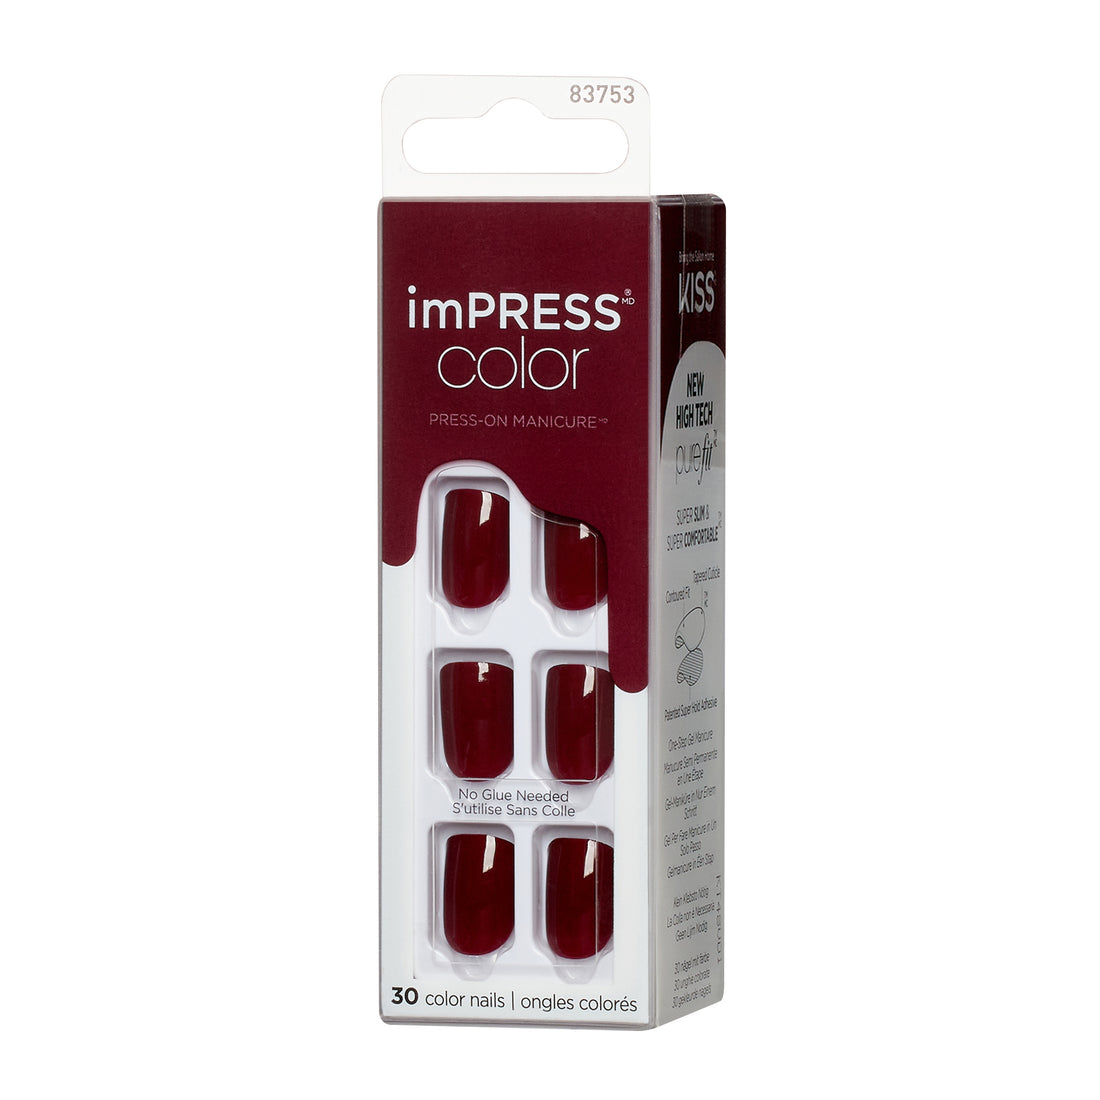 imPRESS Color Press-On Manicure -  I&